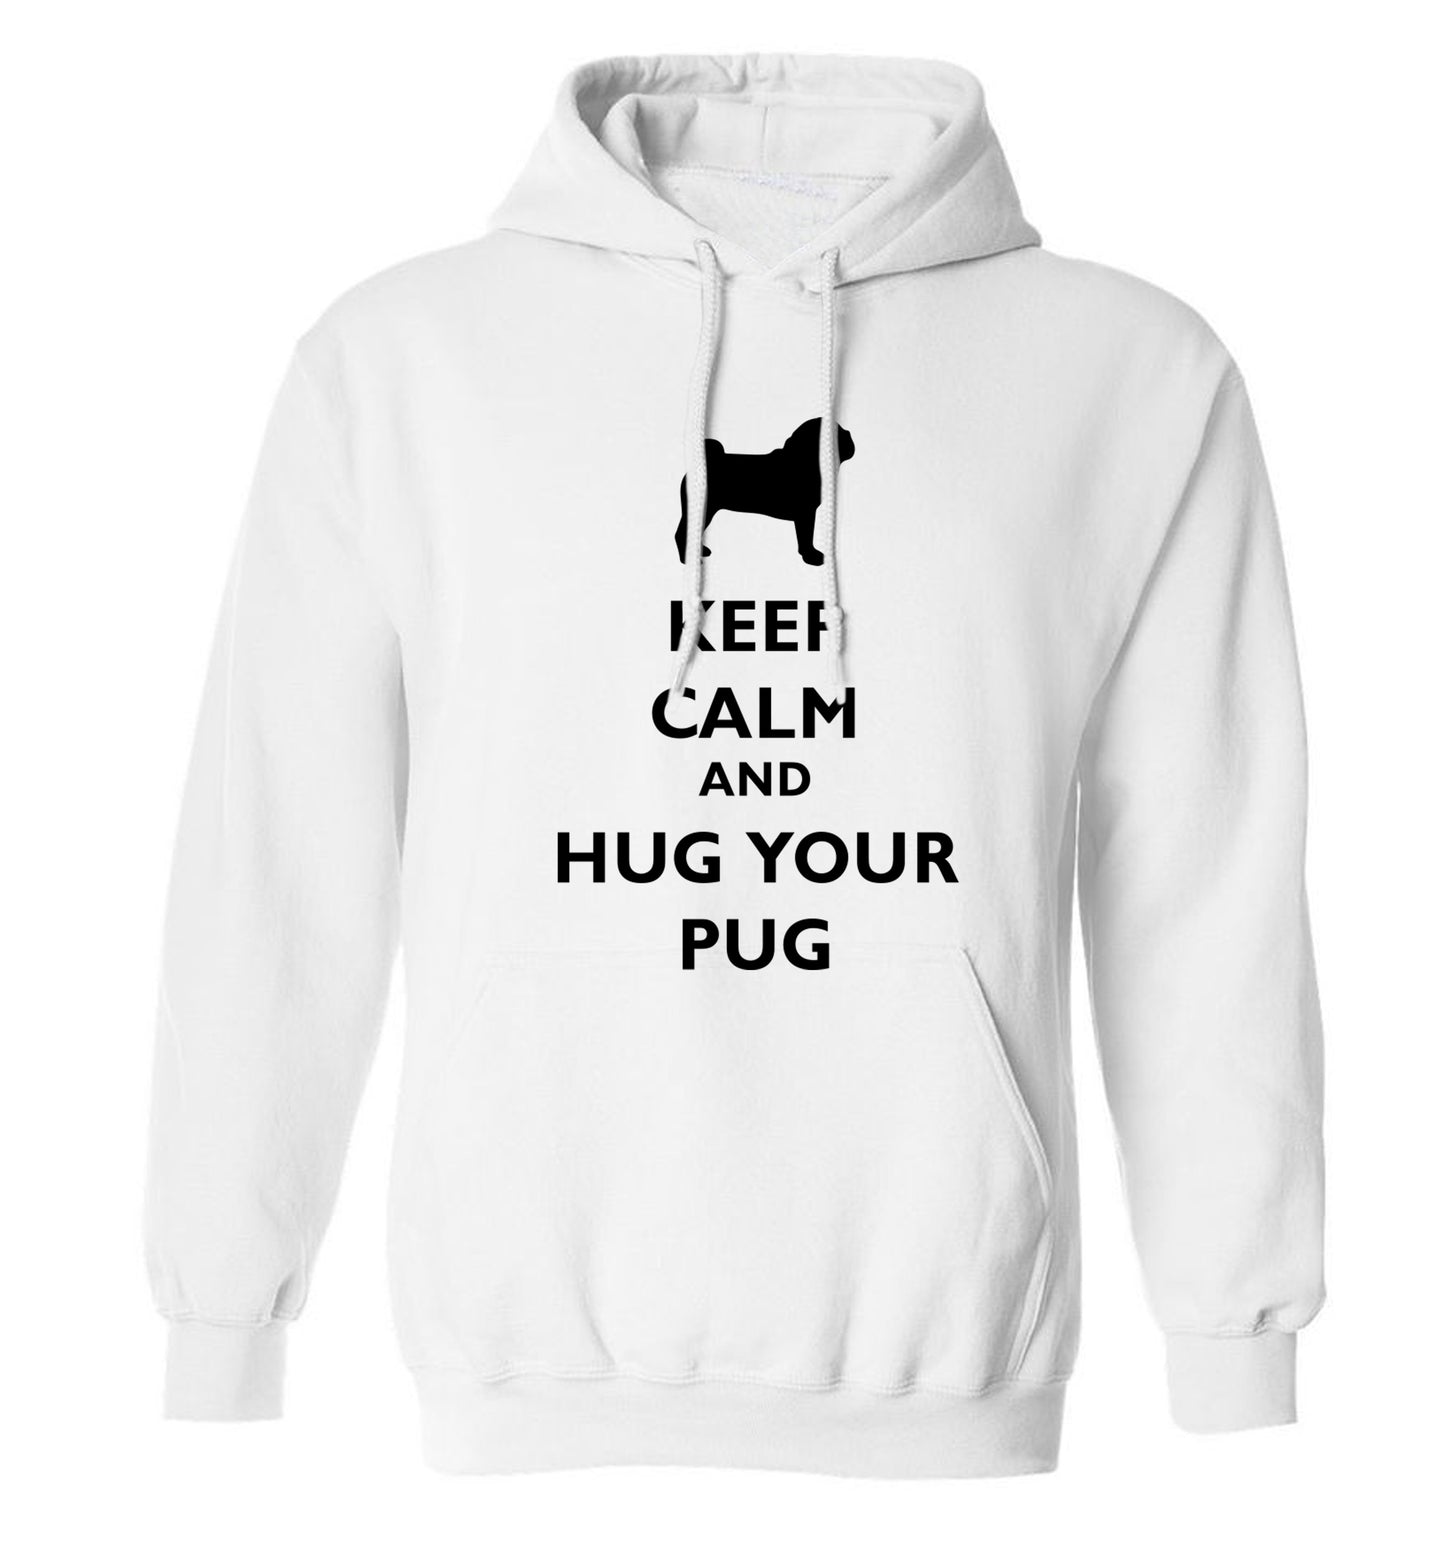 Keep calm and hug your pug adults unisex white hoodie 2XL